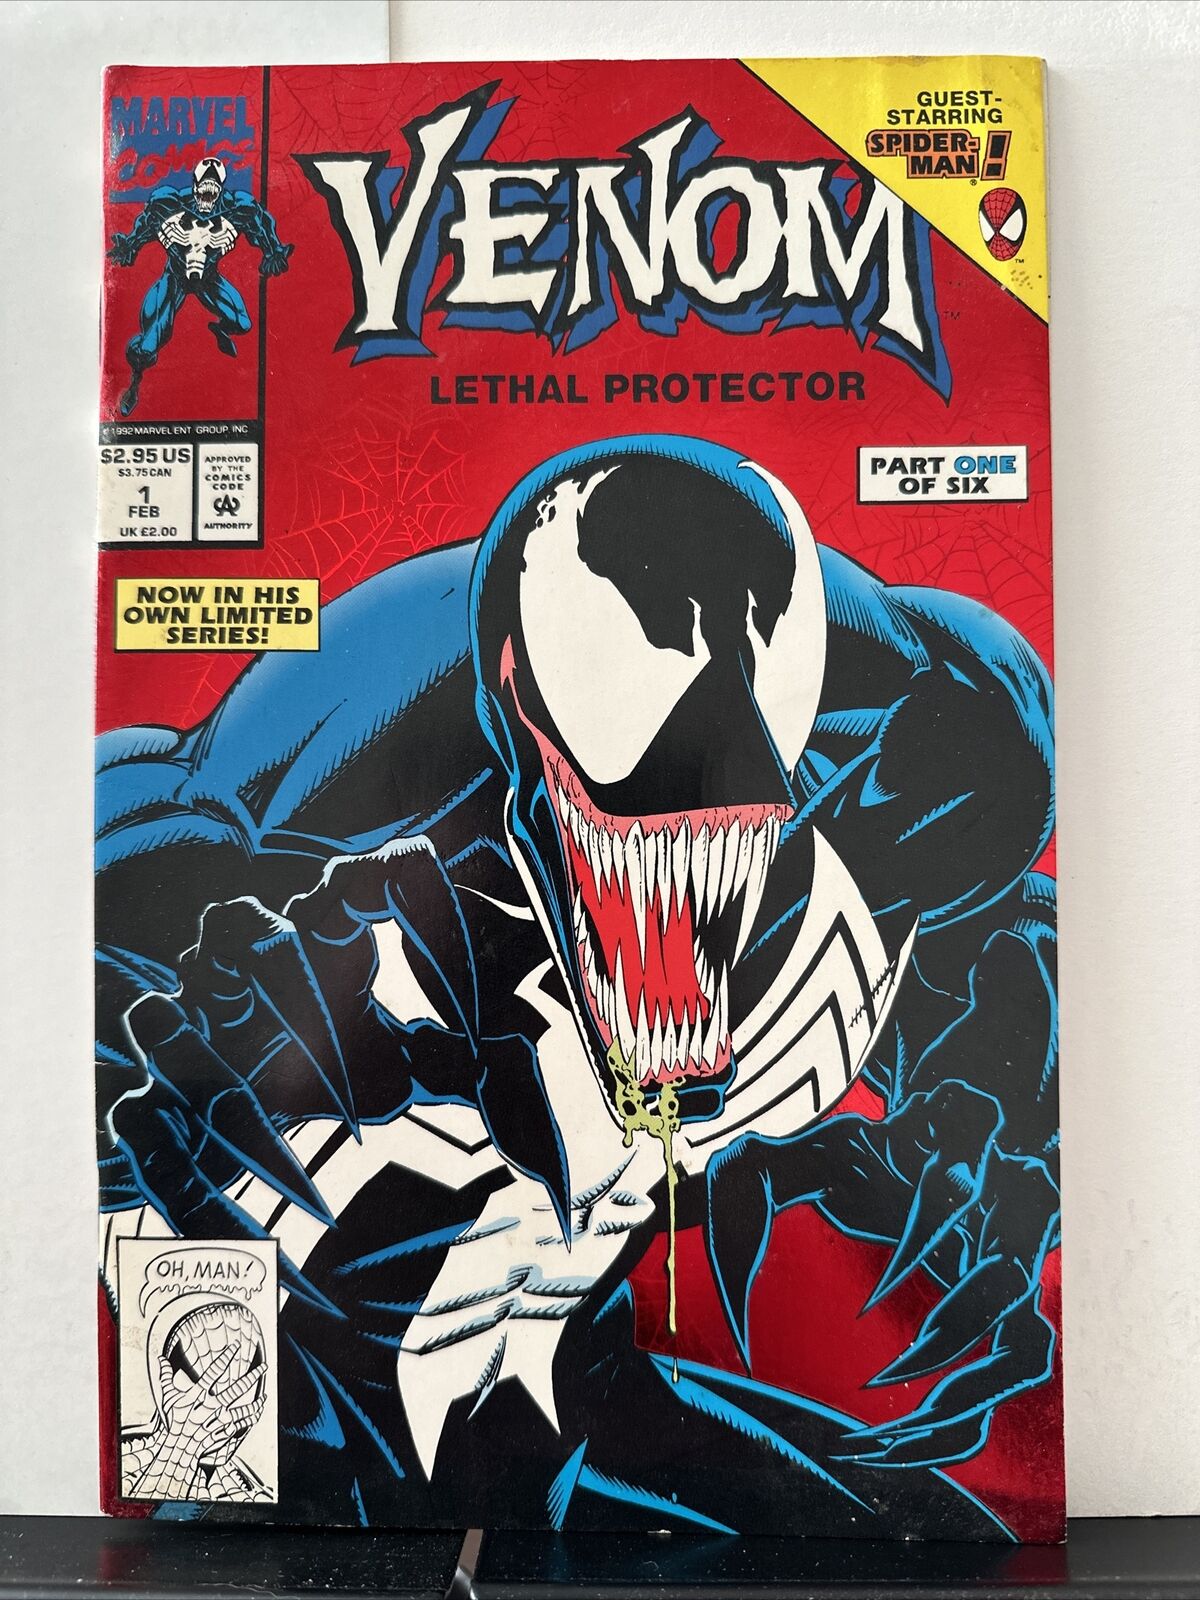 Venom: Lethal Protector #1 (1993) 1st solo title featuring Venom.